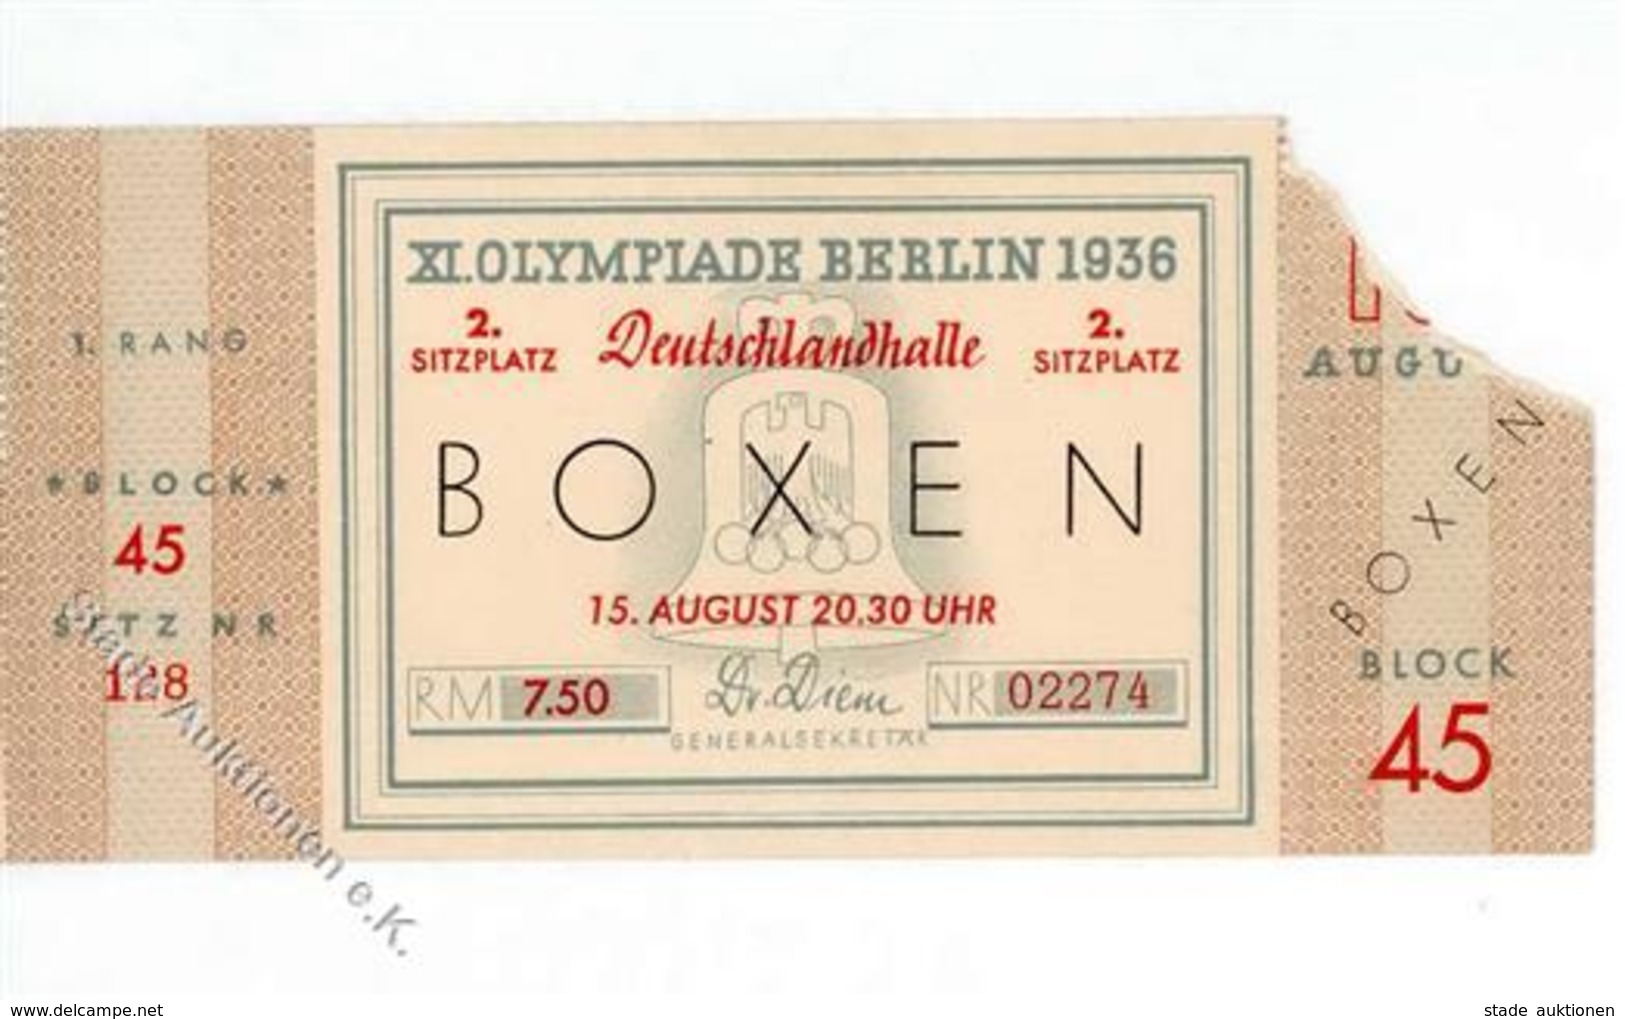 Olympiade 1936 Berlin (1000) Boxen Eintrittskarte I-II - Olympische Spiele